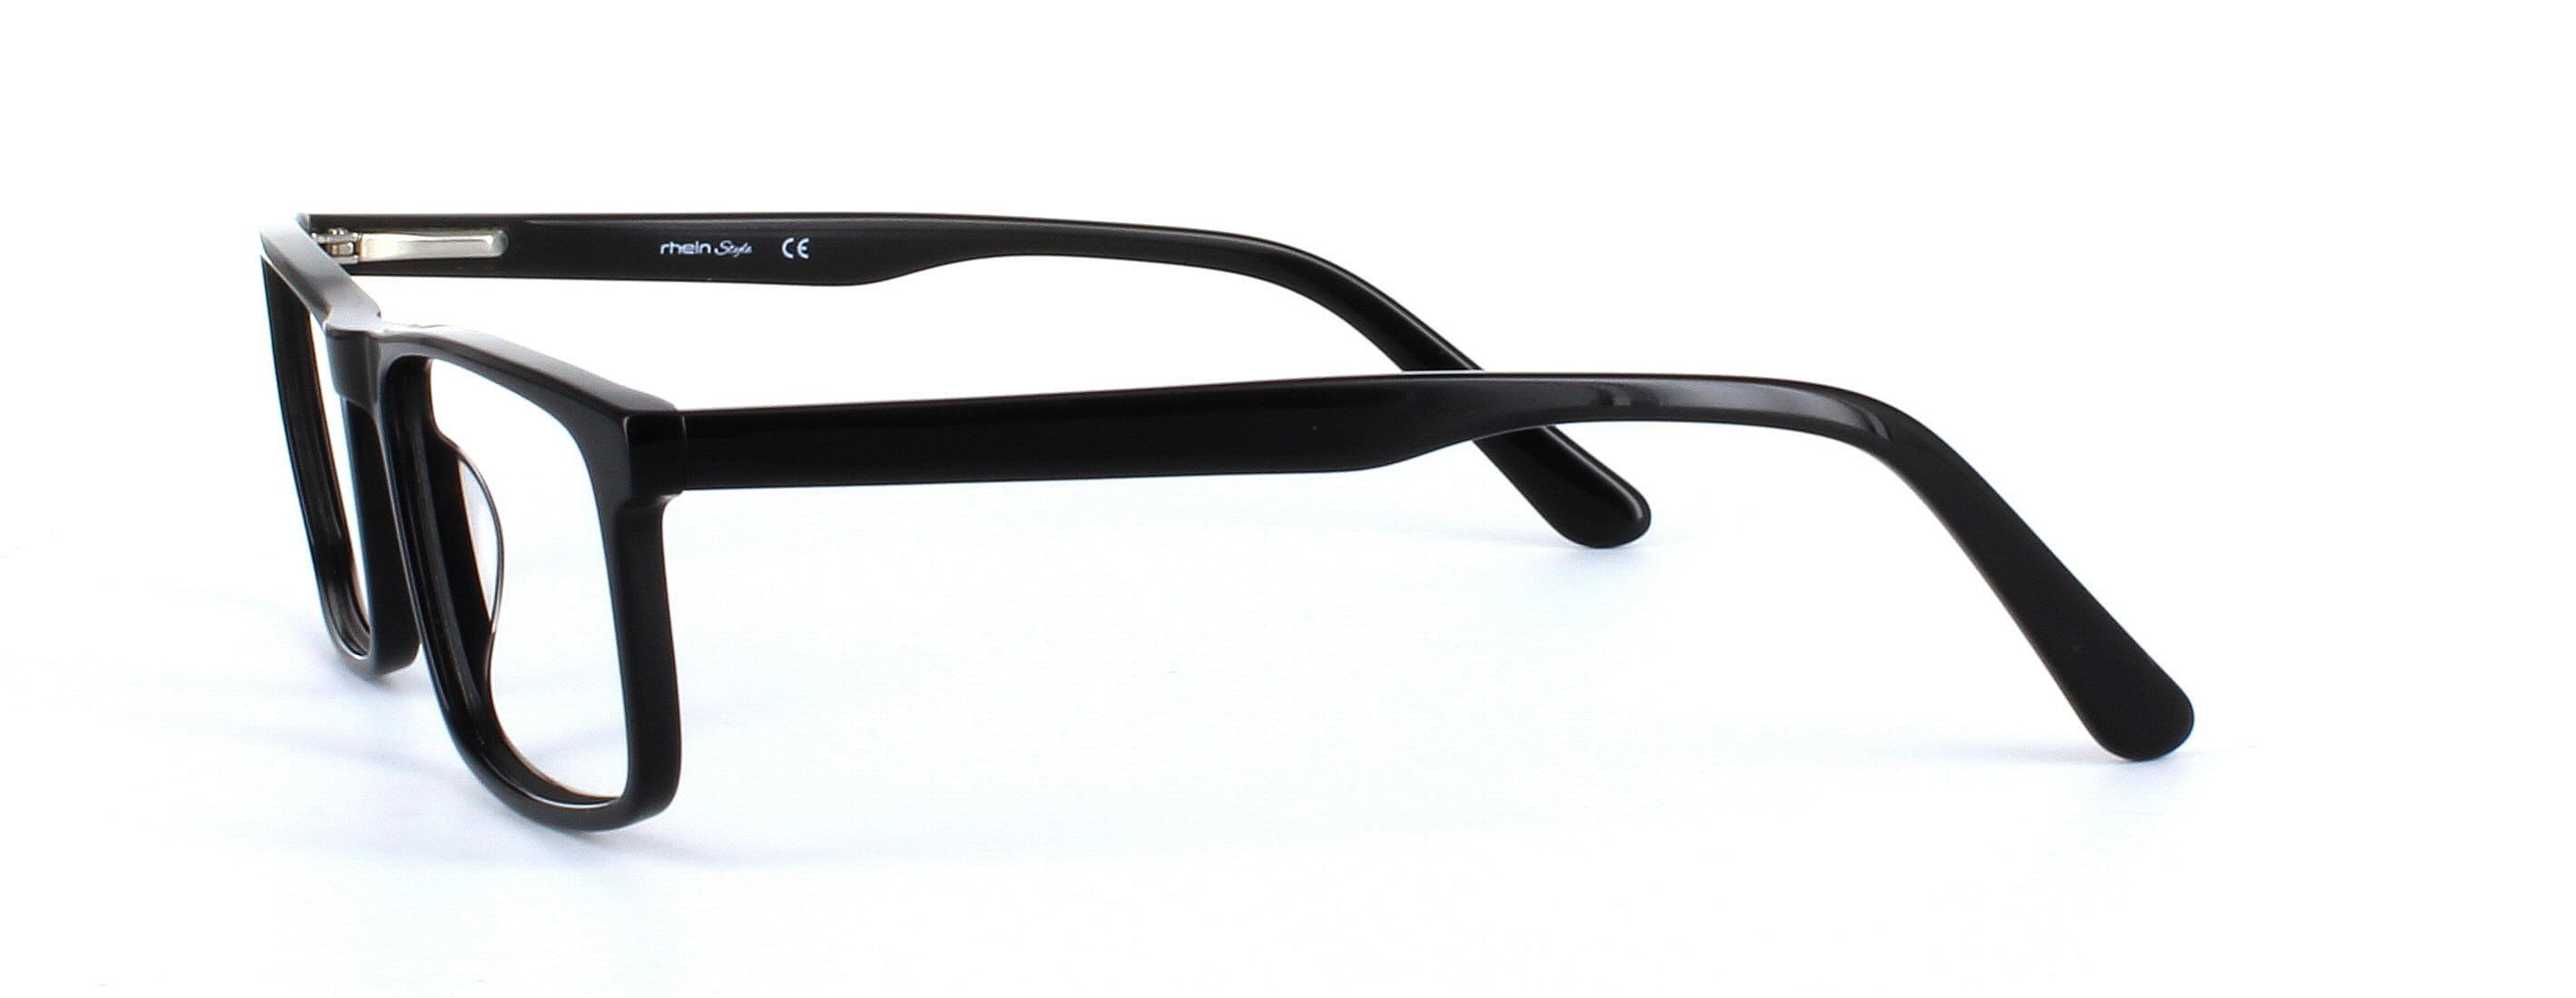 Livadia in shiny black - unisex acetate glasses - image view 2